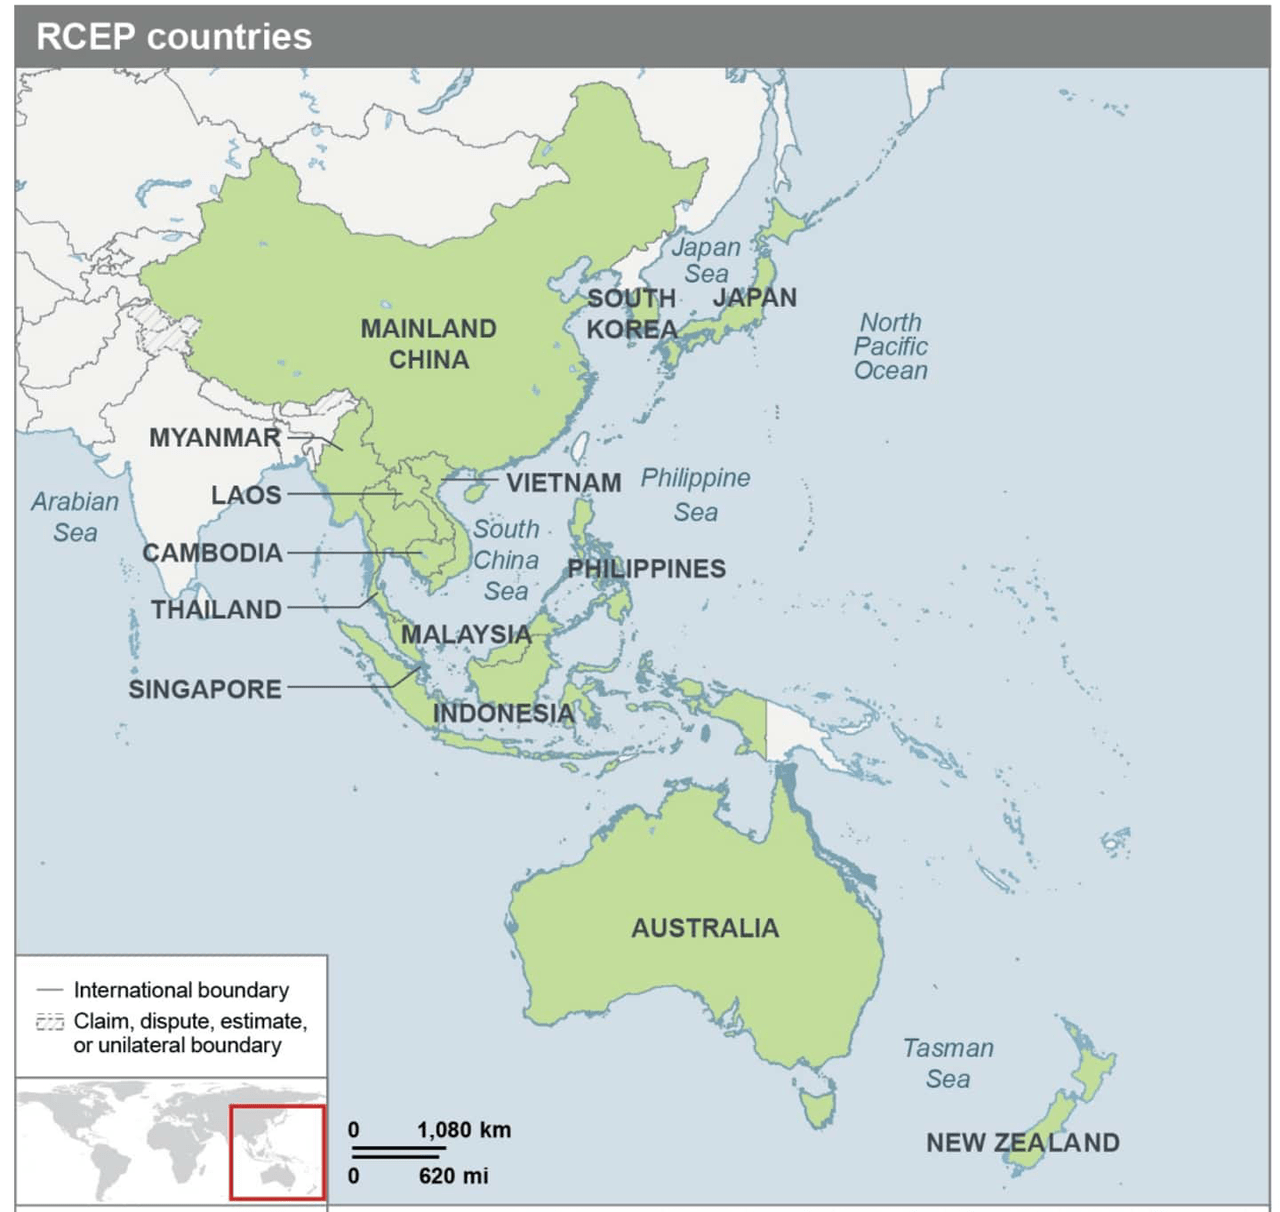 RCEP countries